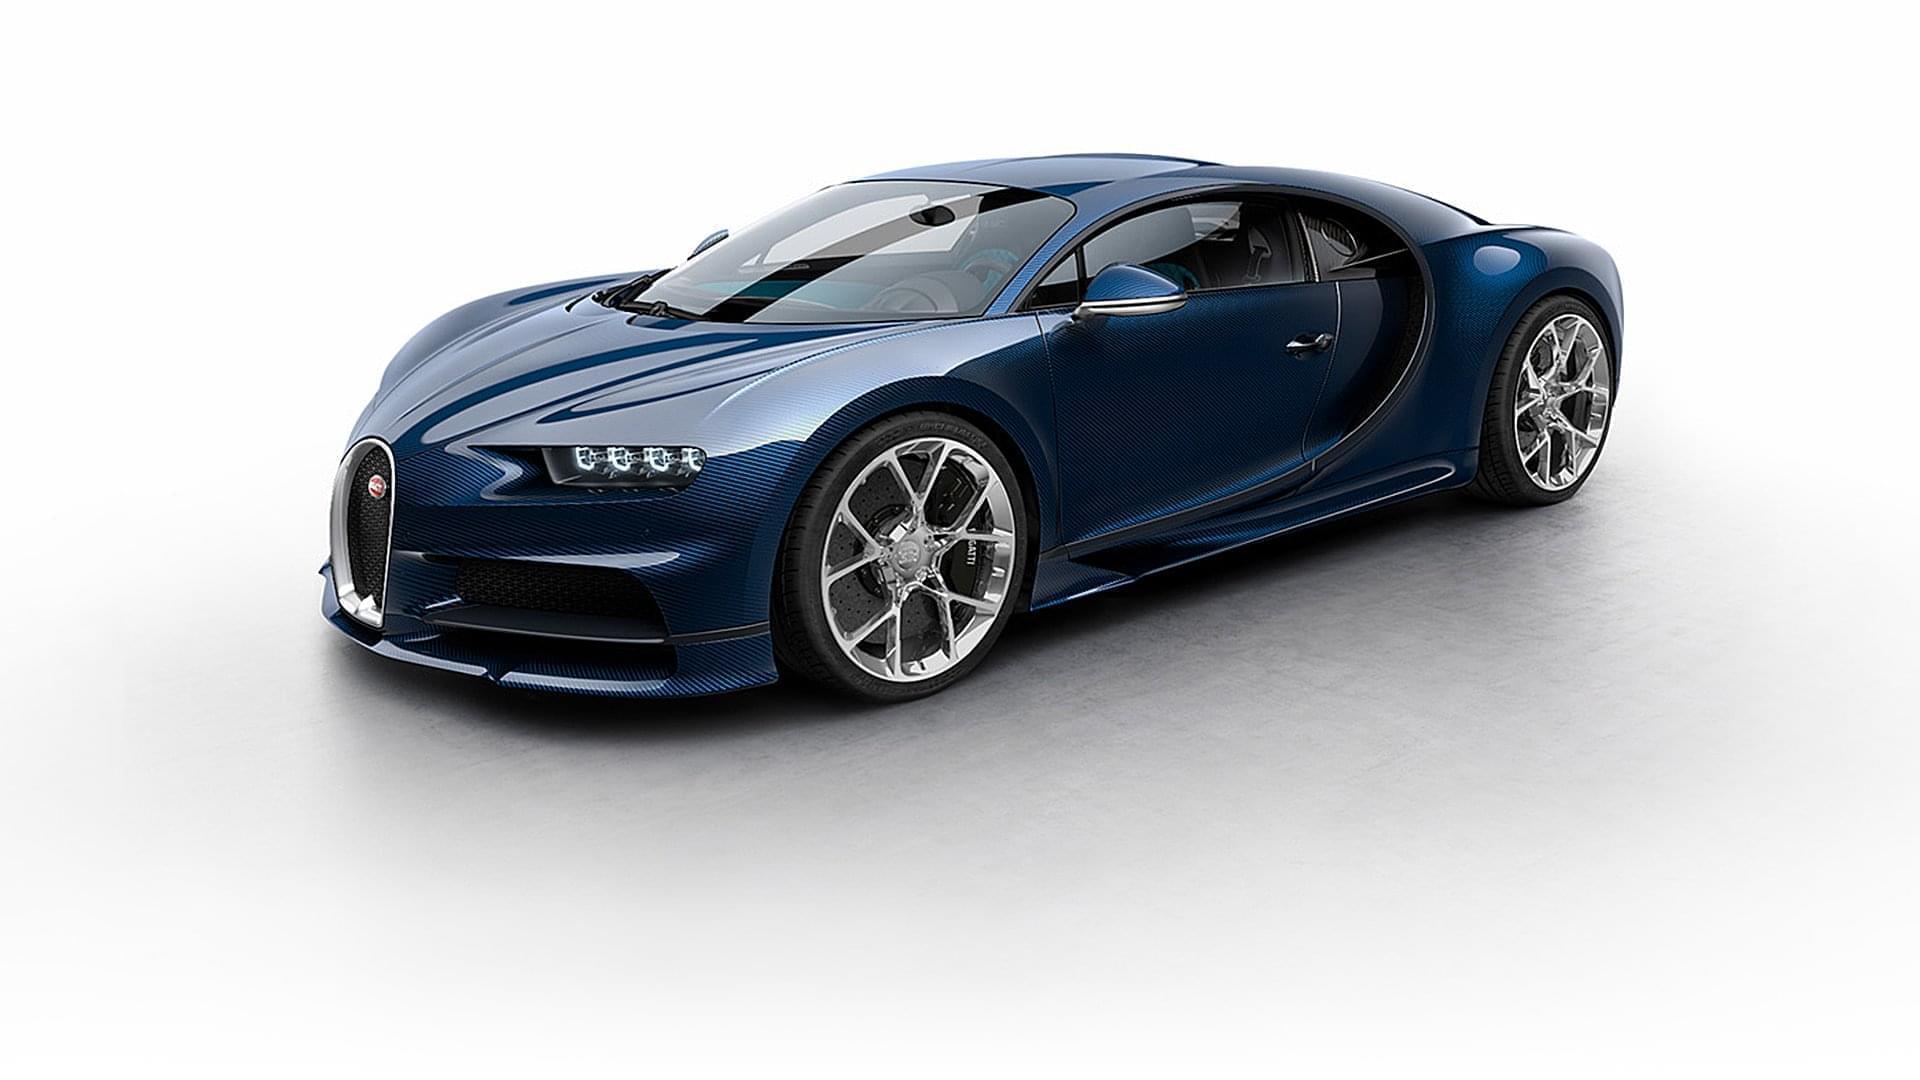 Bugatti Chiron - the luxurious super sports car